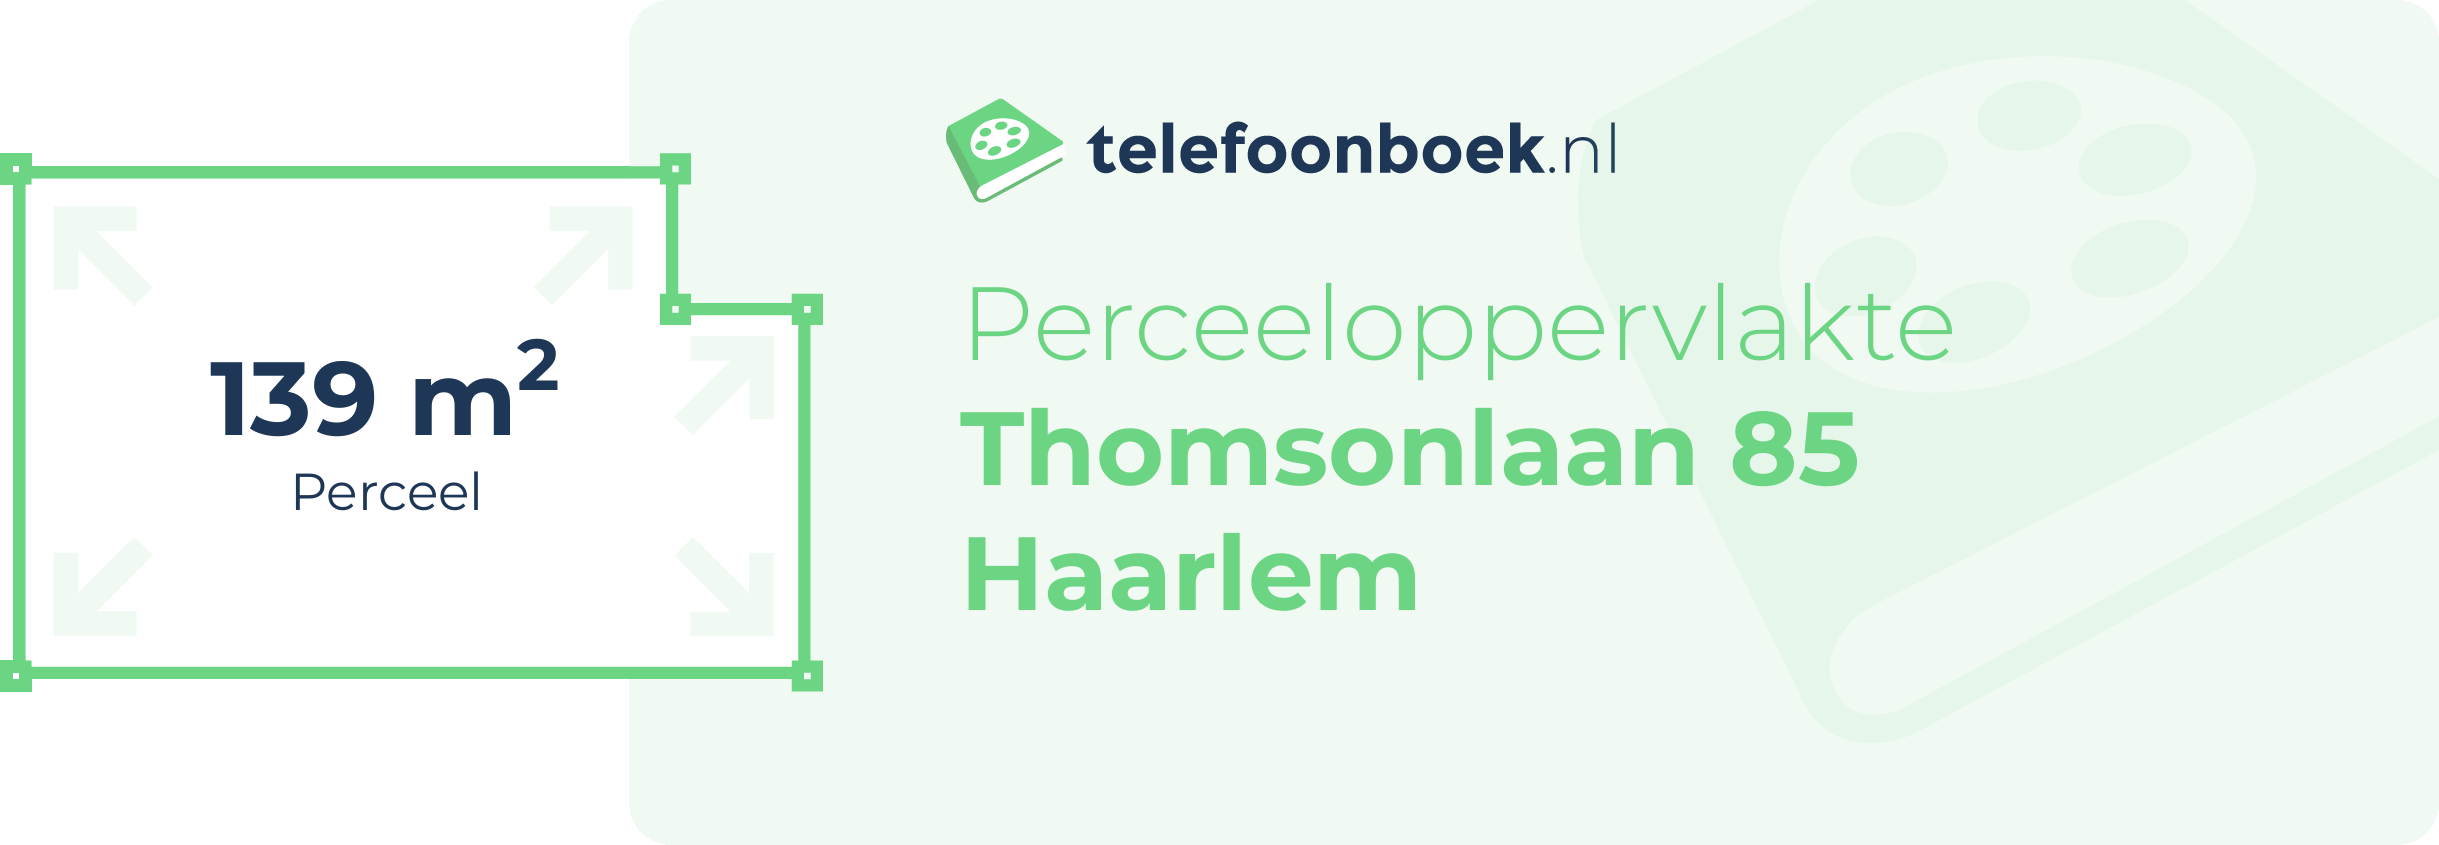 Perceeloppervlakte Thomsonlaan 85 Haarlem